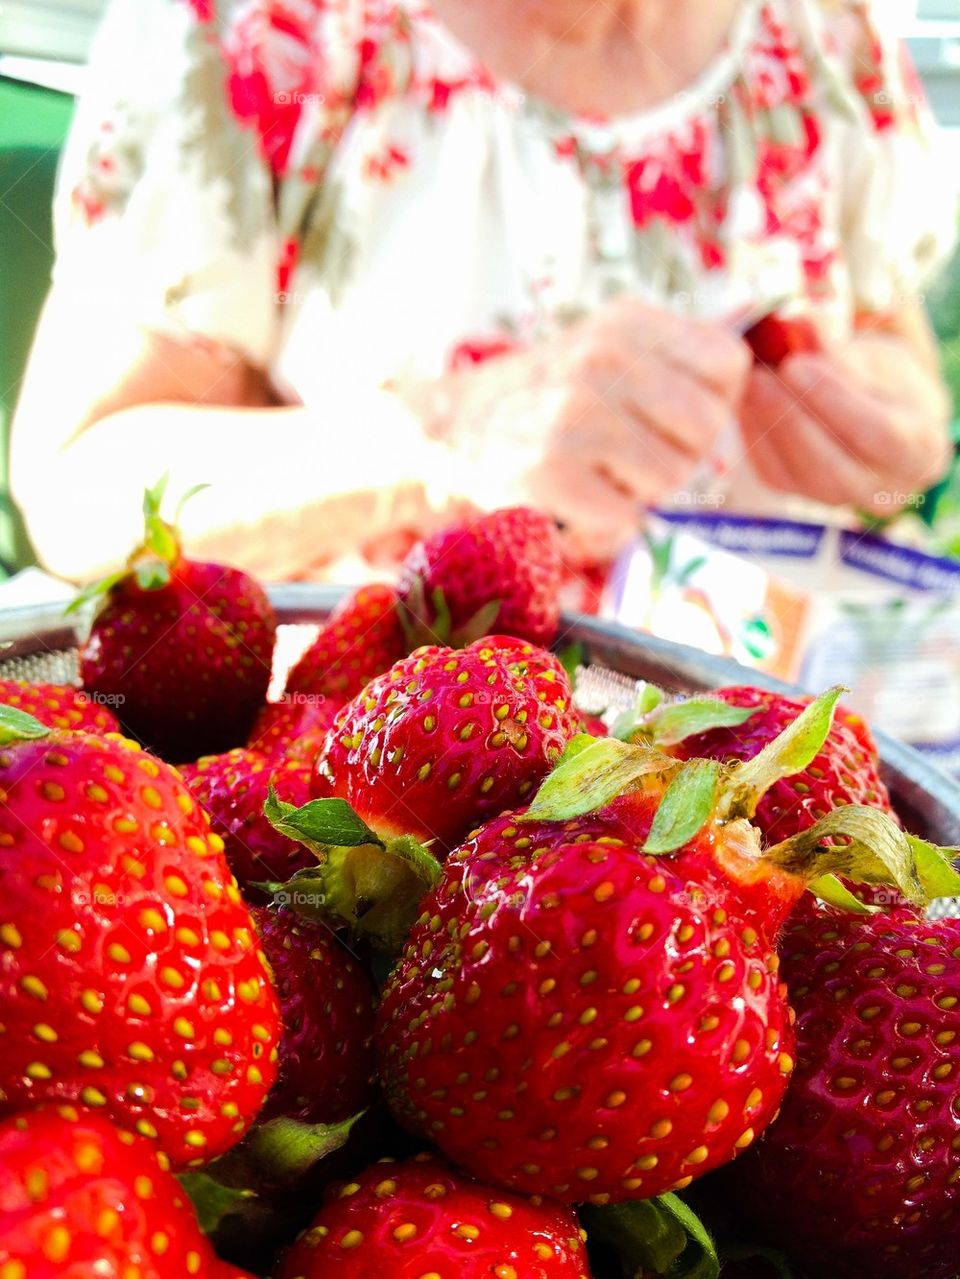 Strawberry lover. Strawberries